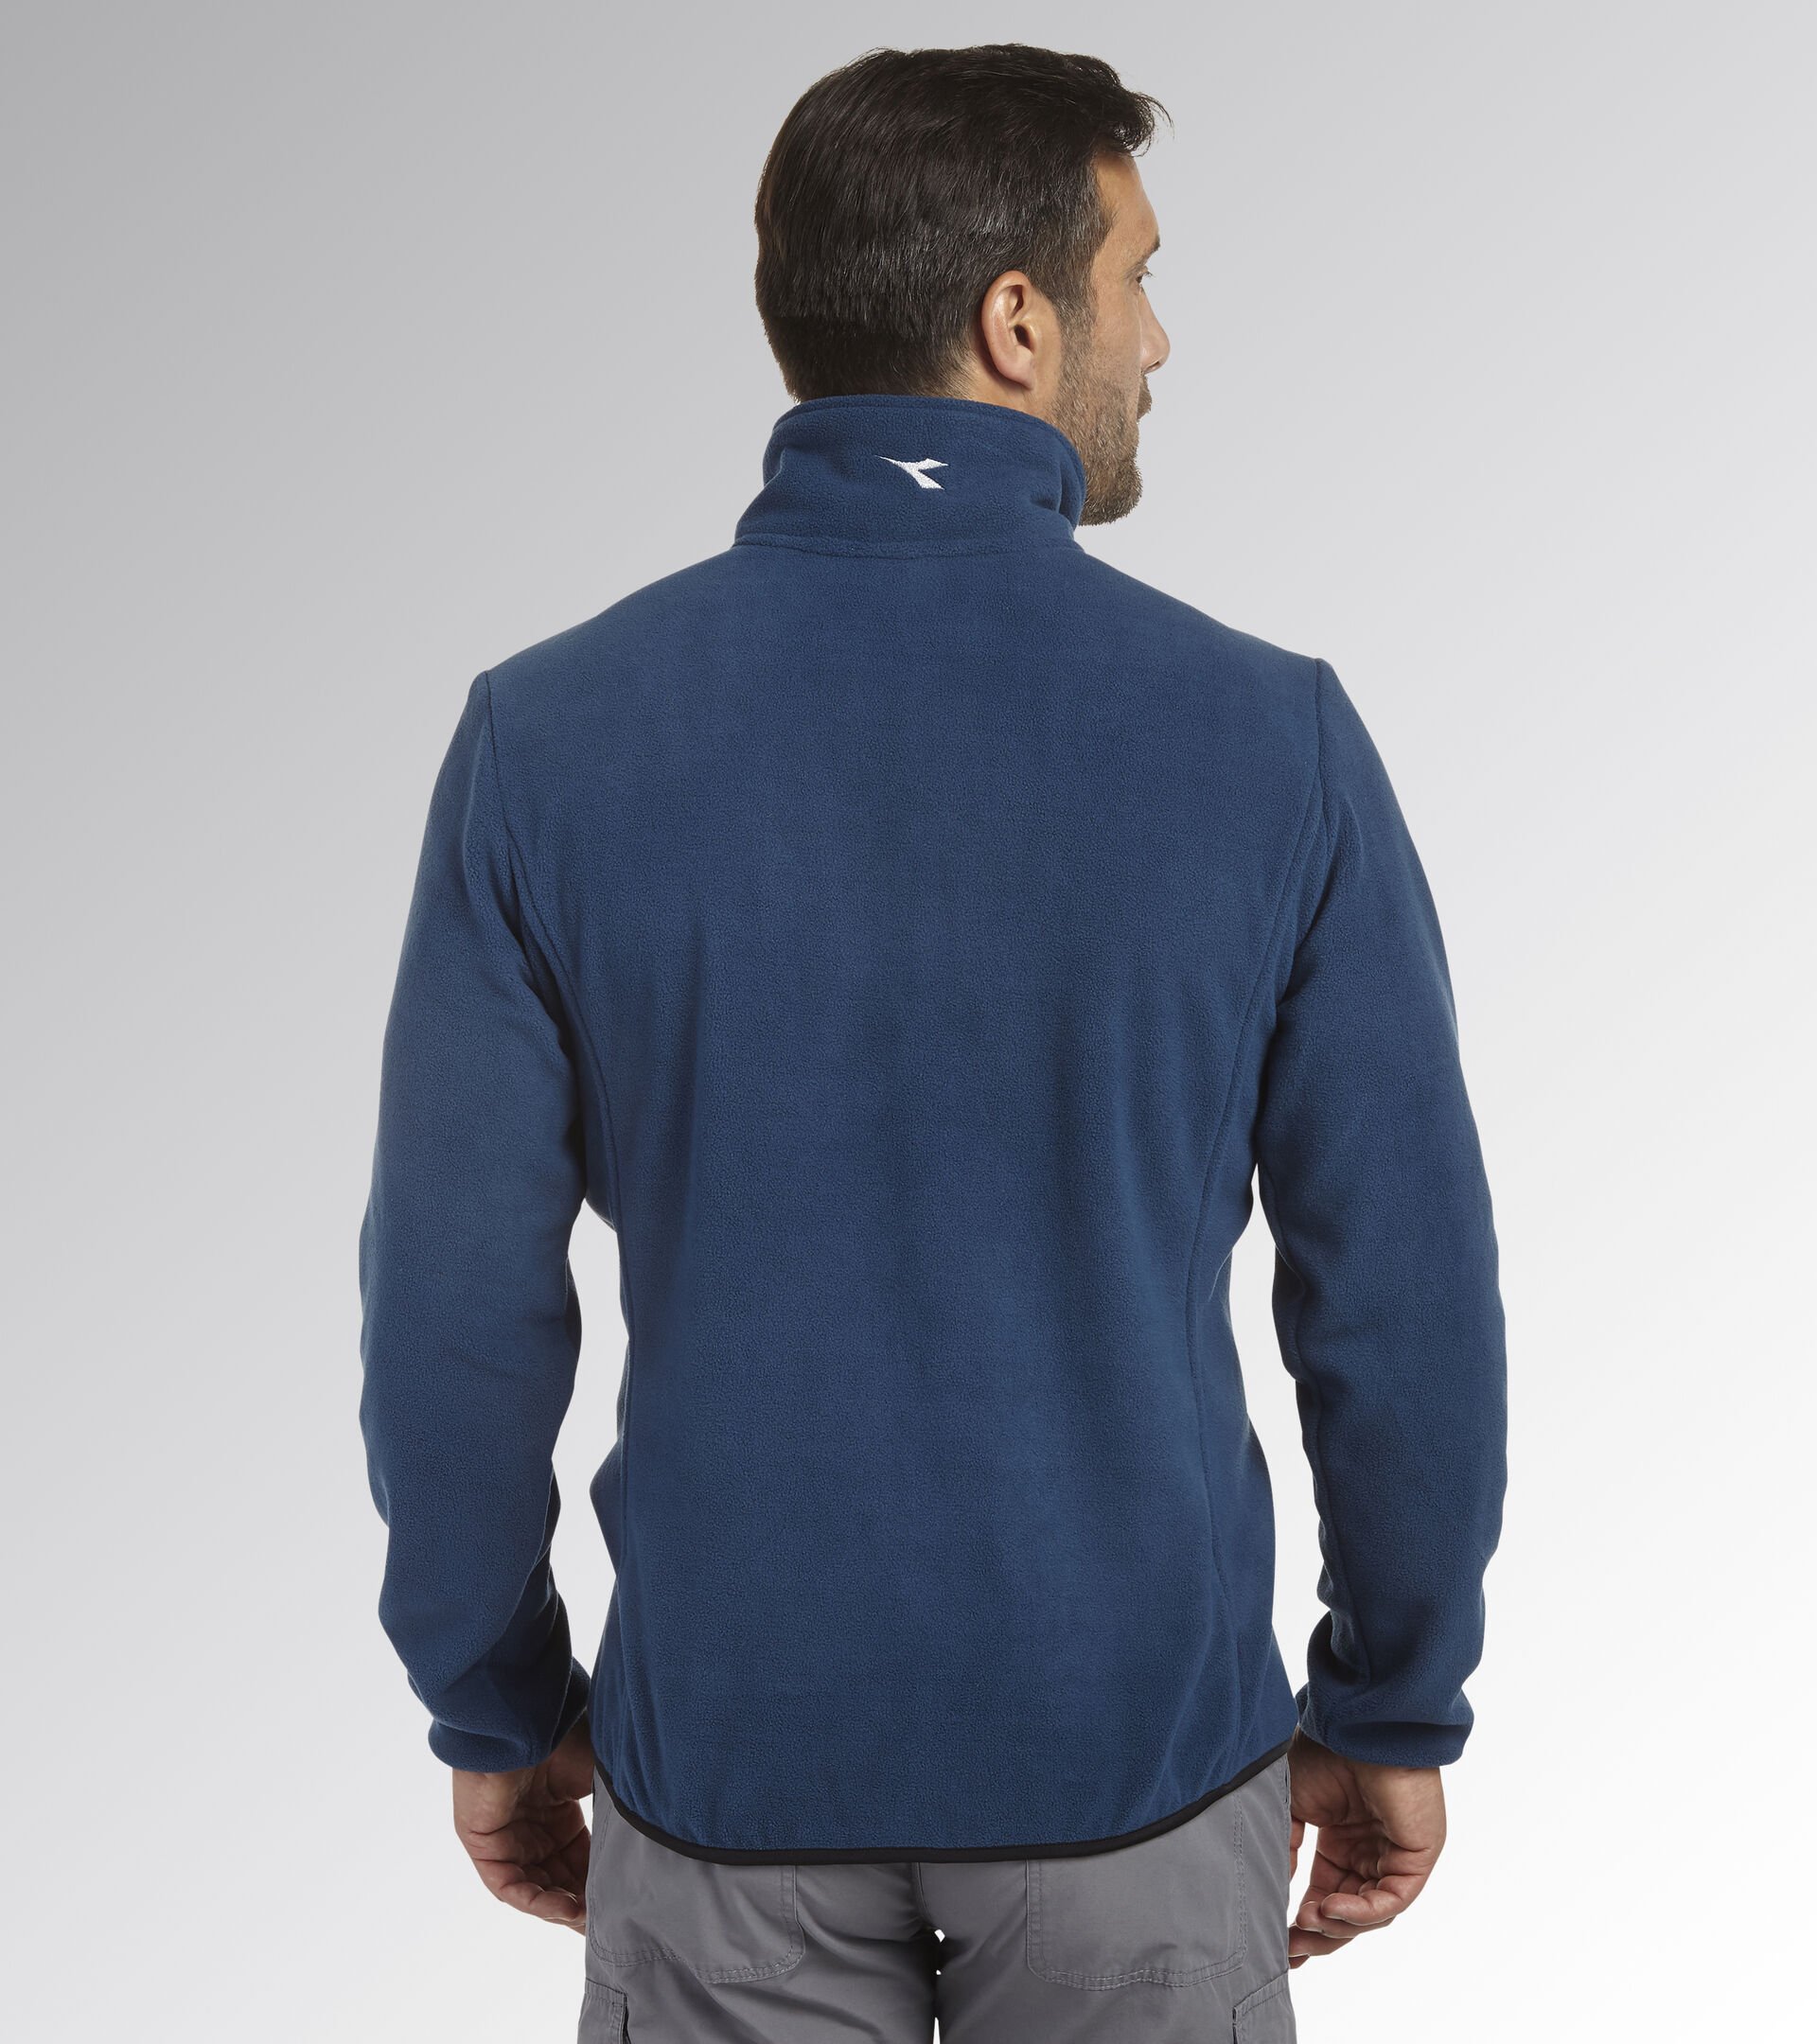 Arbeits-Fleece-Sweater SWEAT PILE FZ DUNKEL JEANSTOFF BLAU - Utility